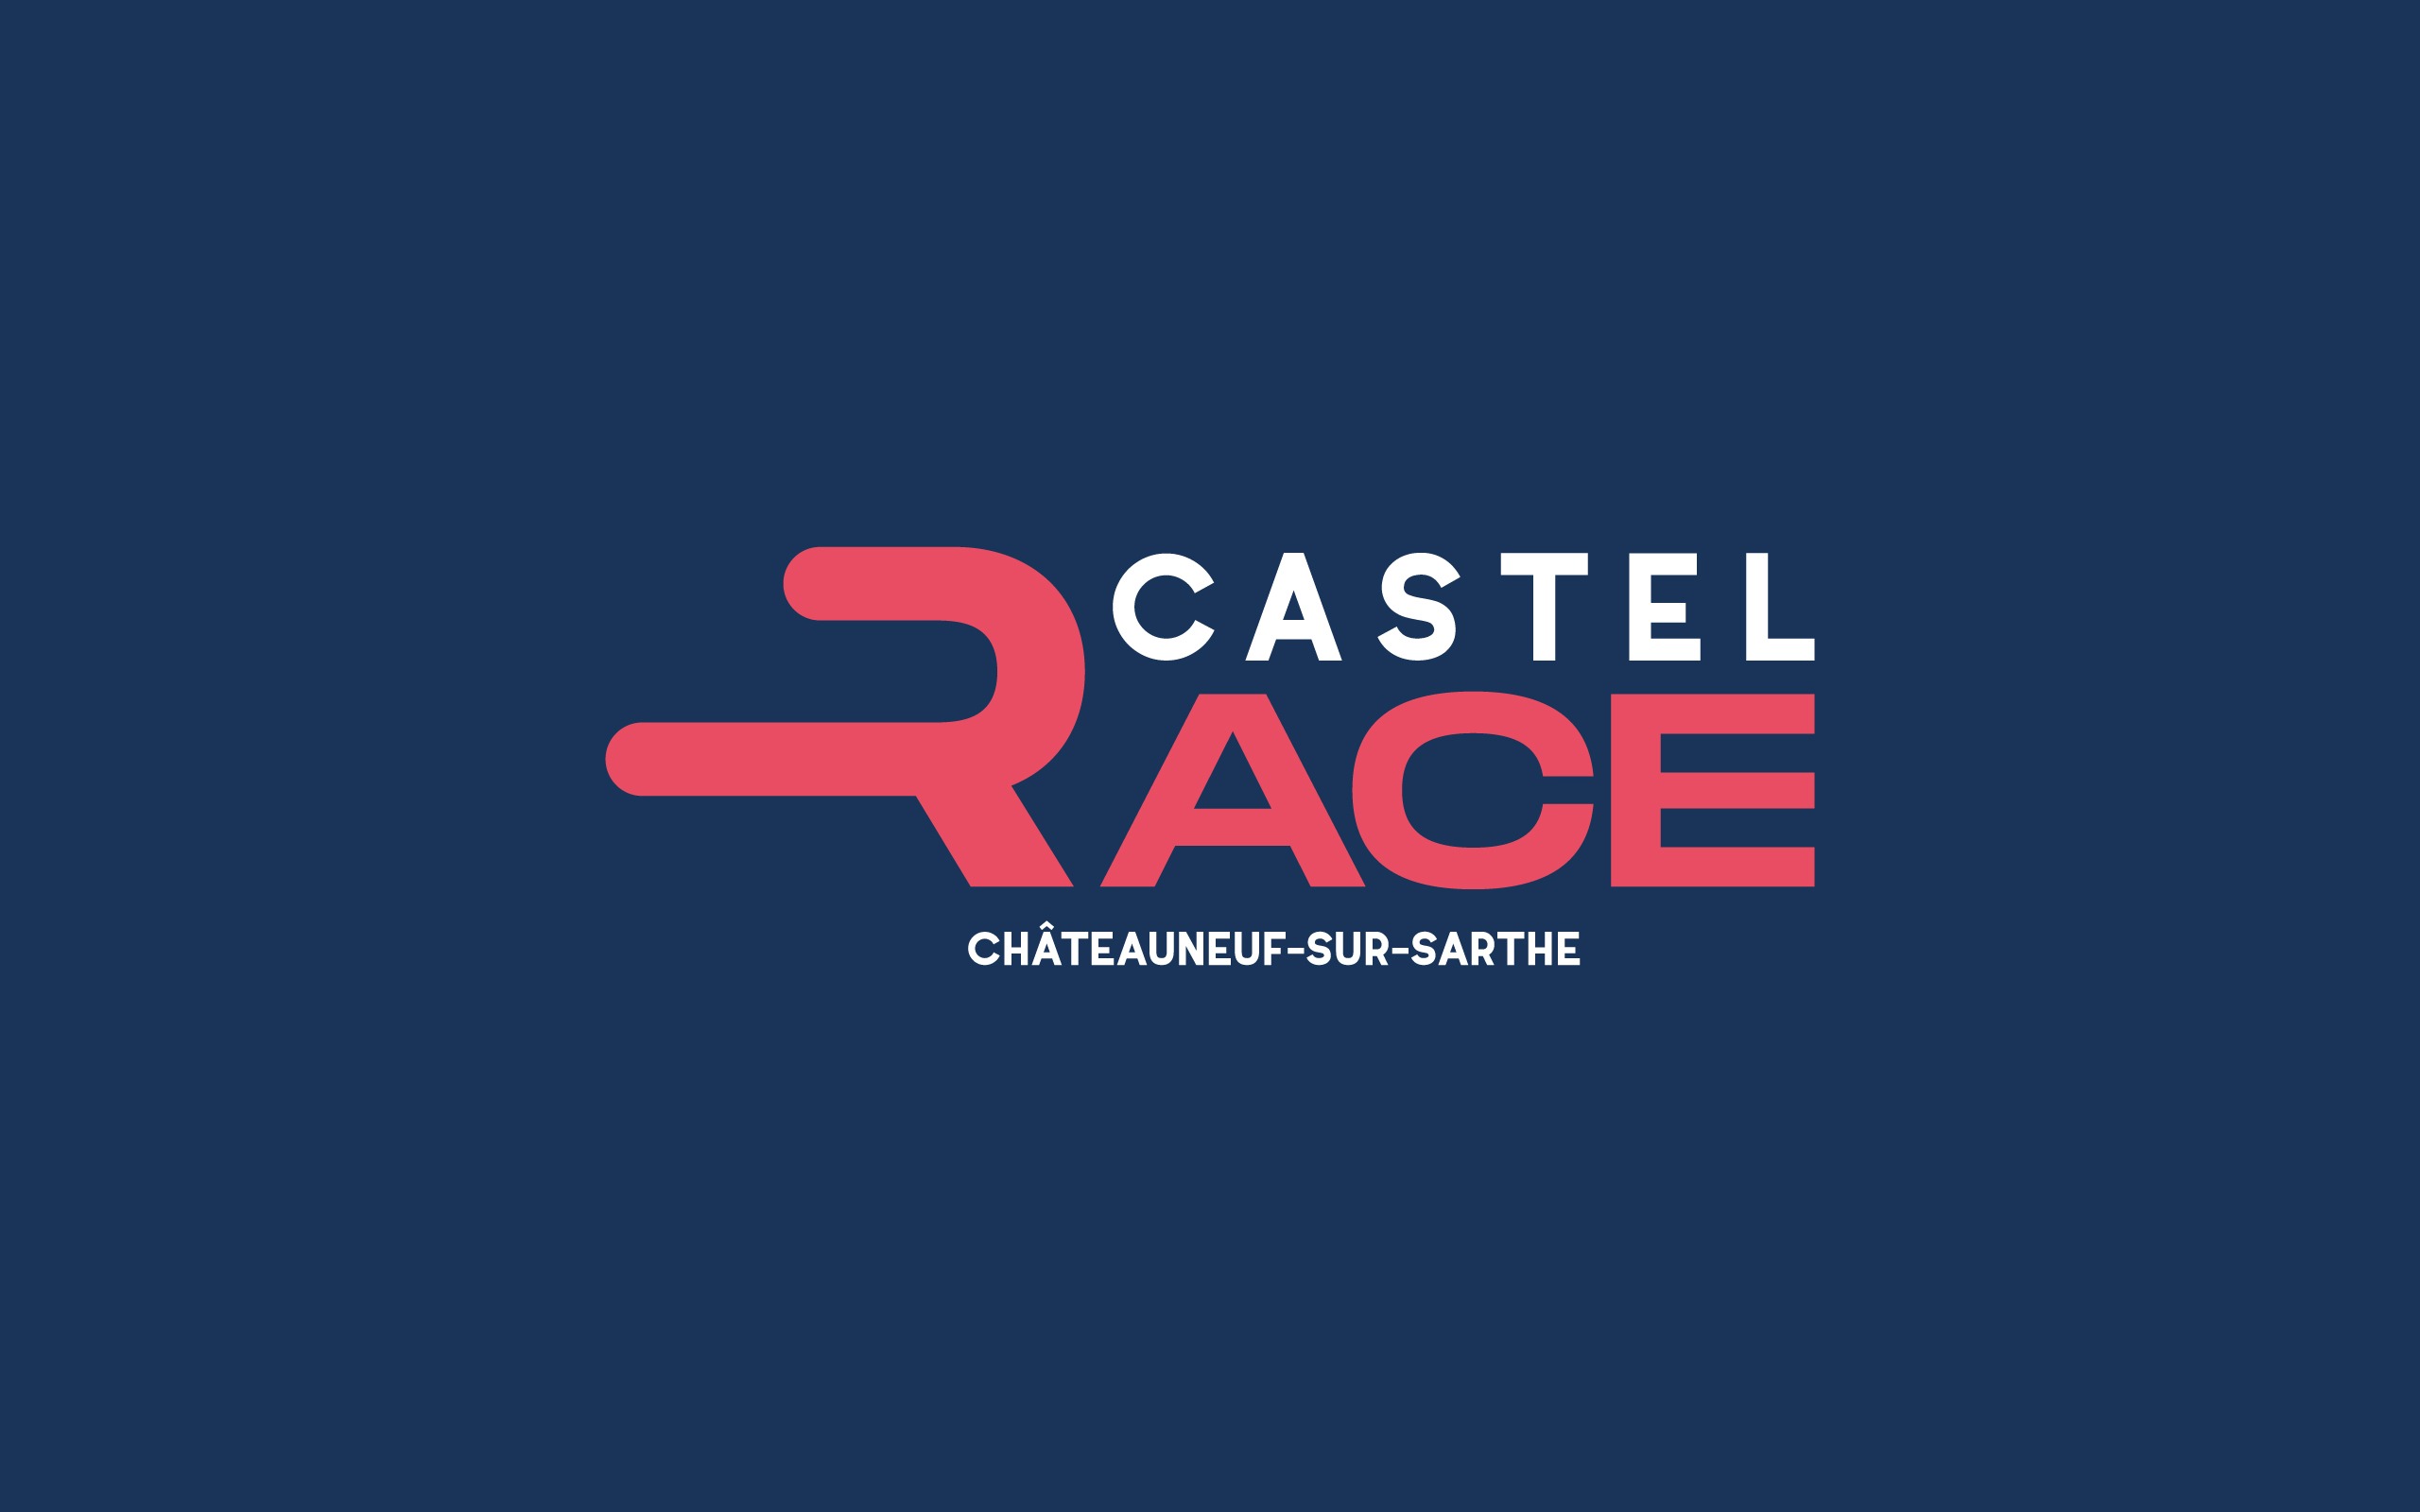 Castel Race